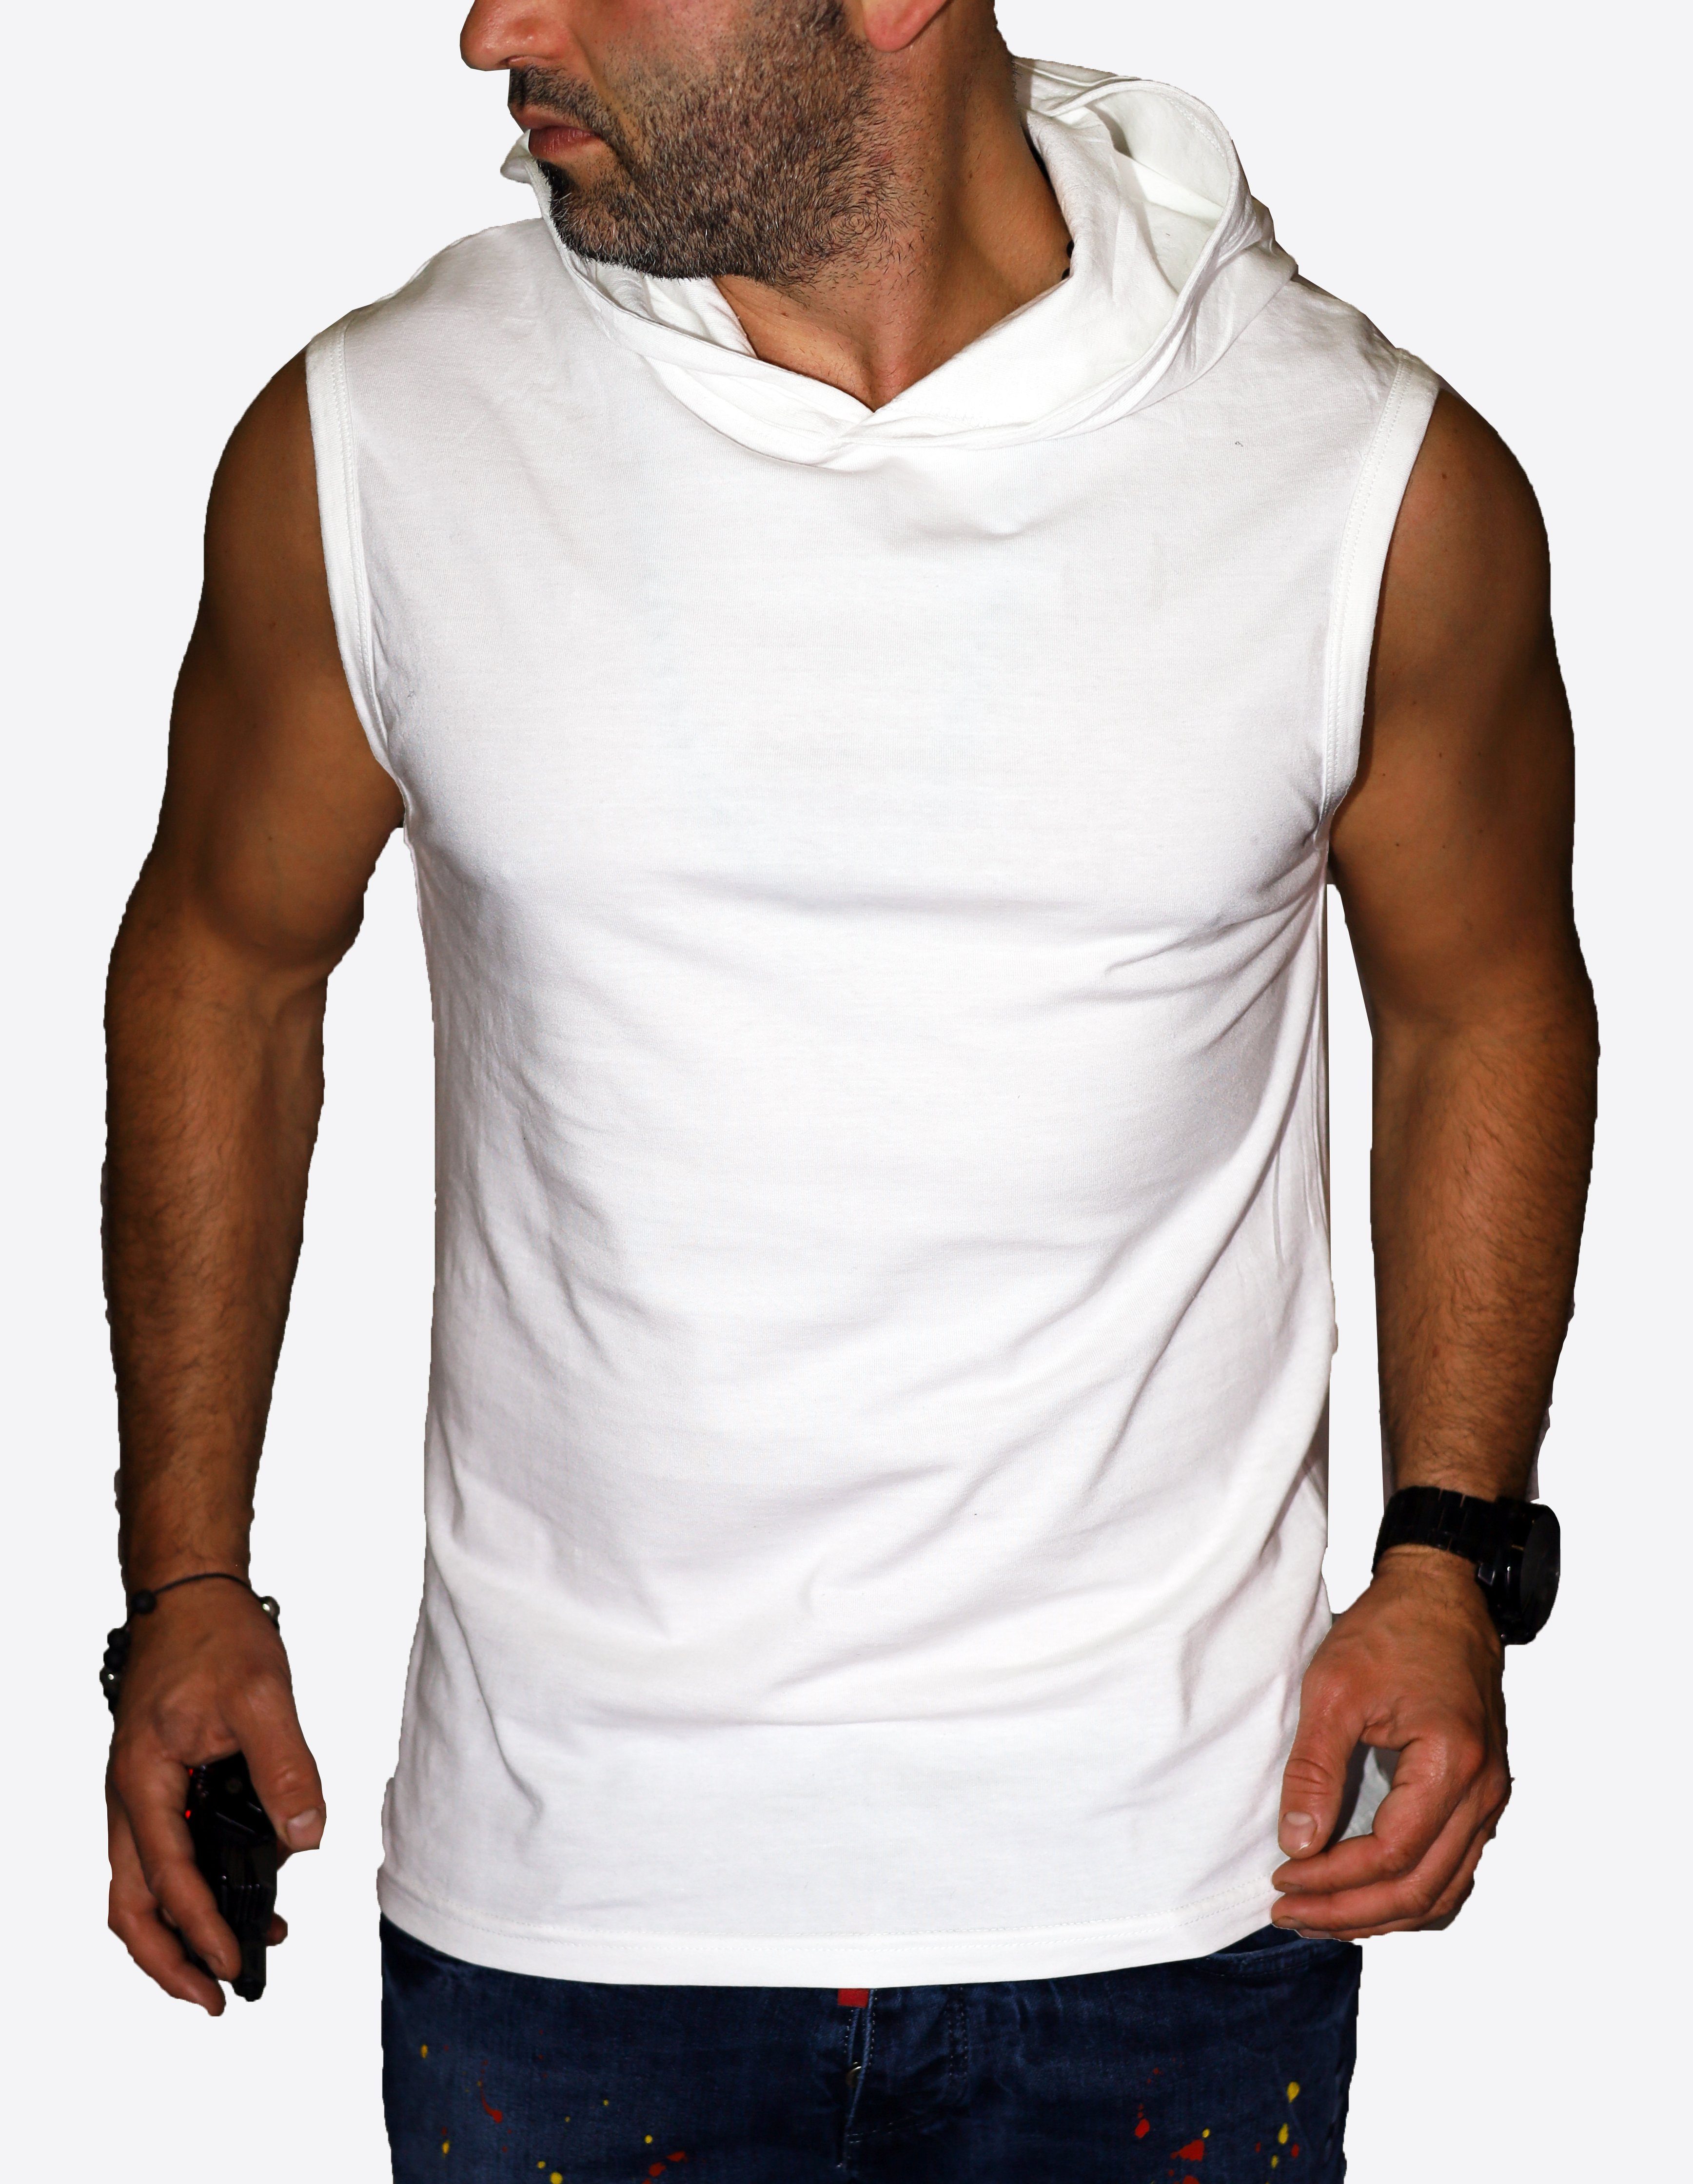 RMK T-Shirt Tanktop Muskelshirt Muscleshirt